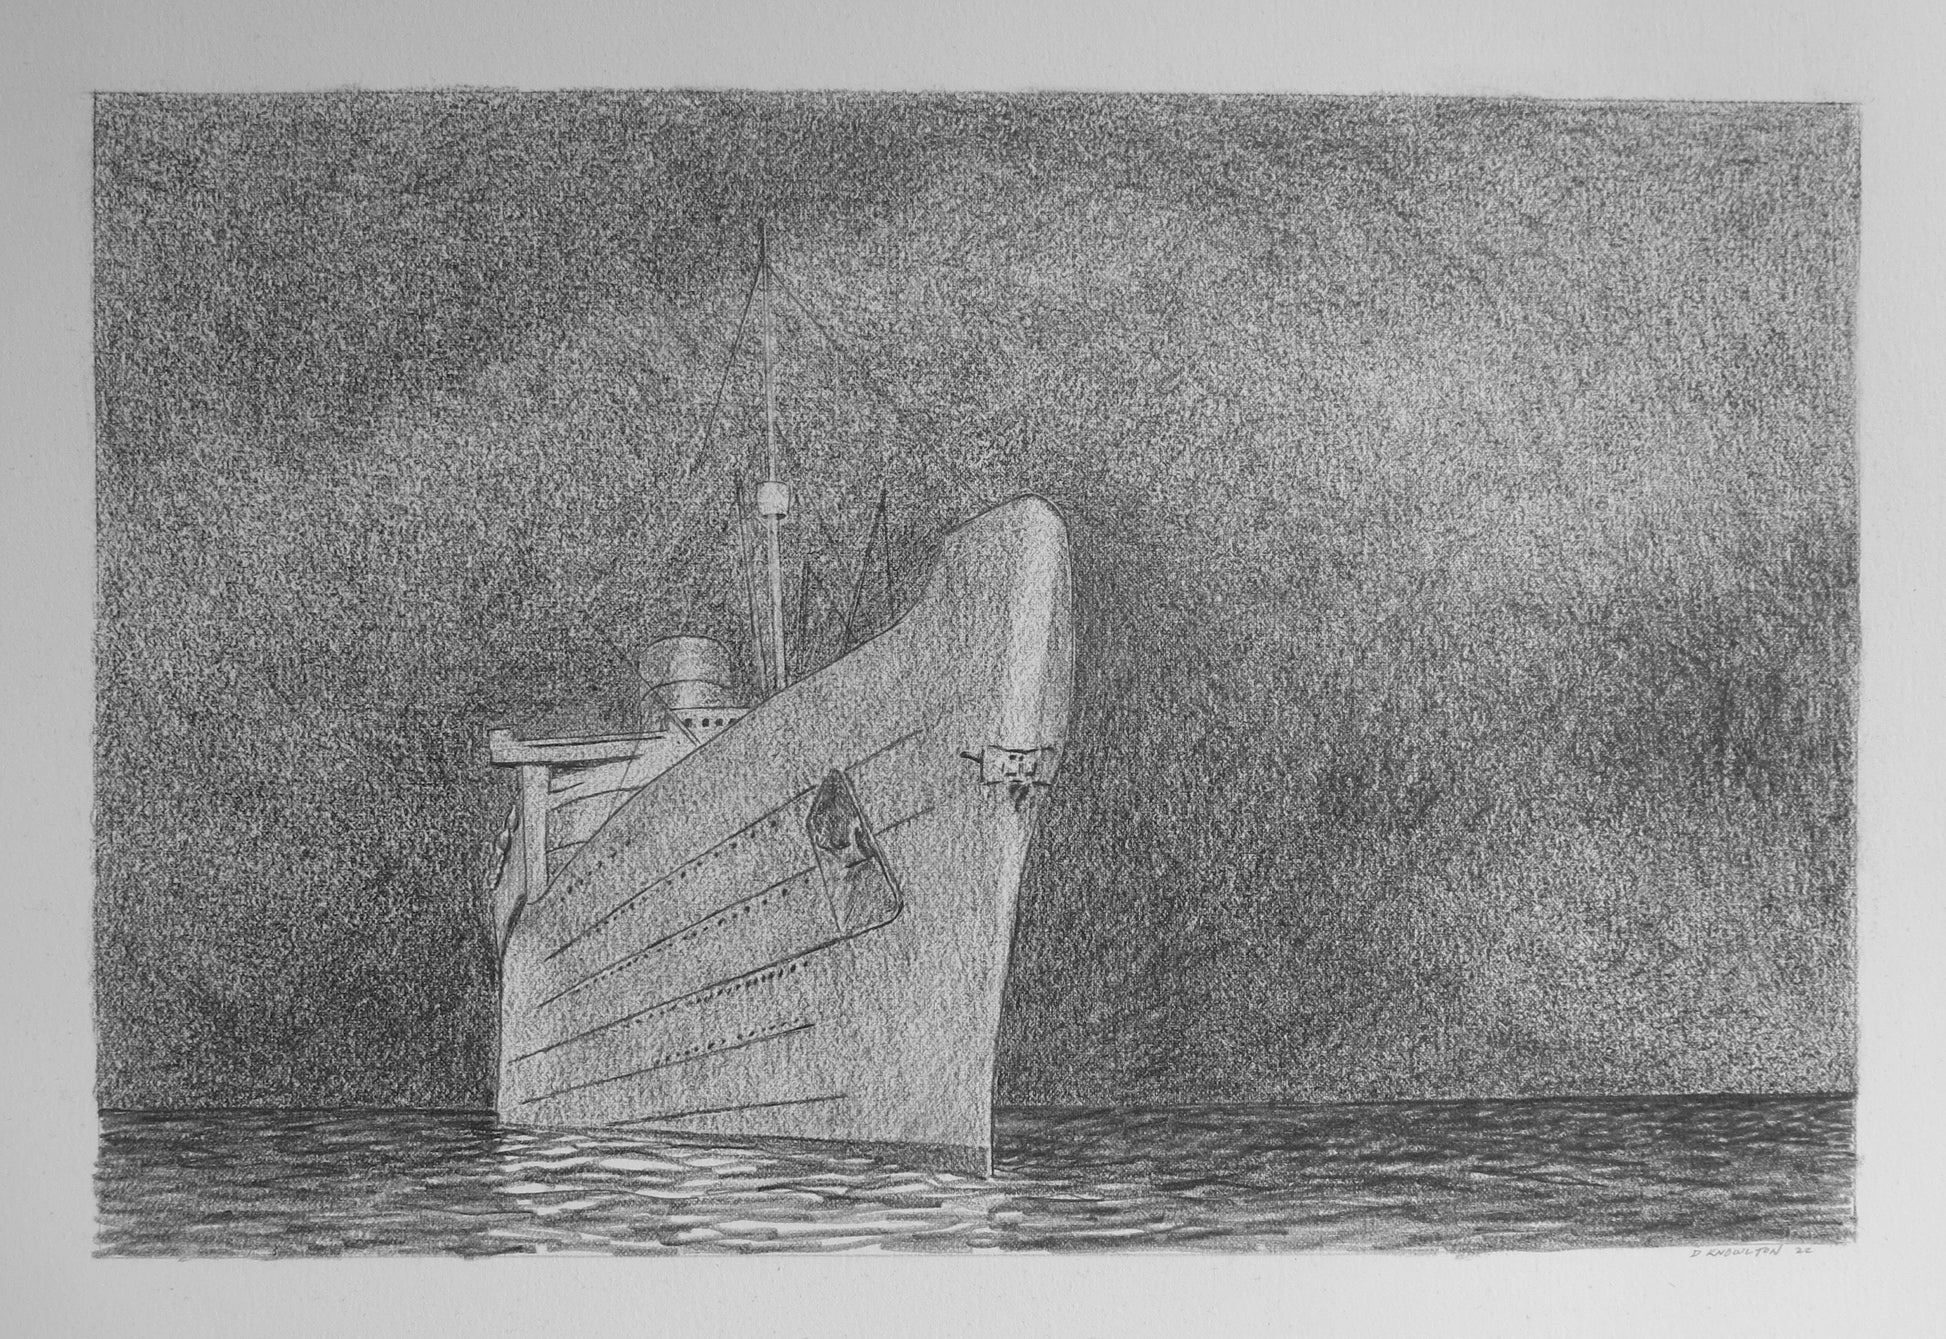 Study for Adrift-Drawing-David Knowlton-Sorrel Sky Gallery